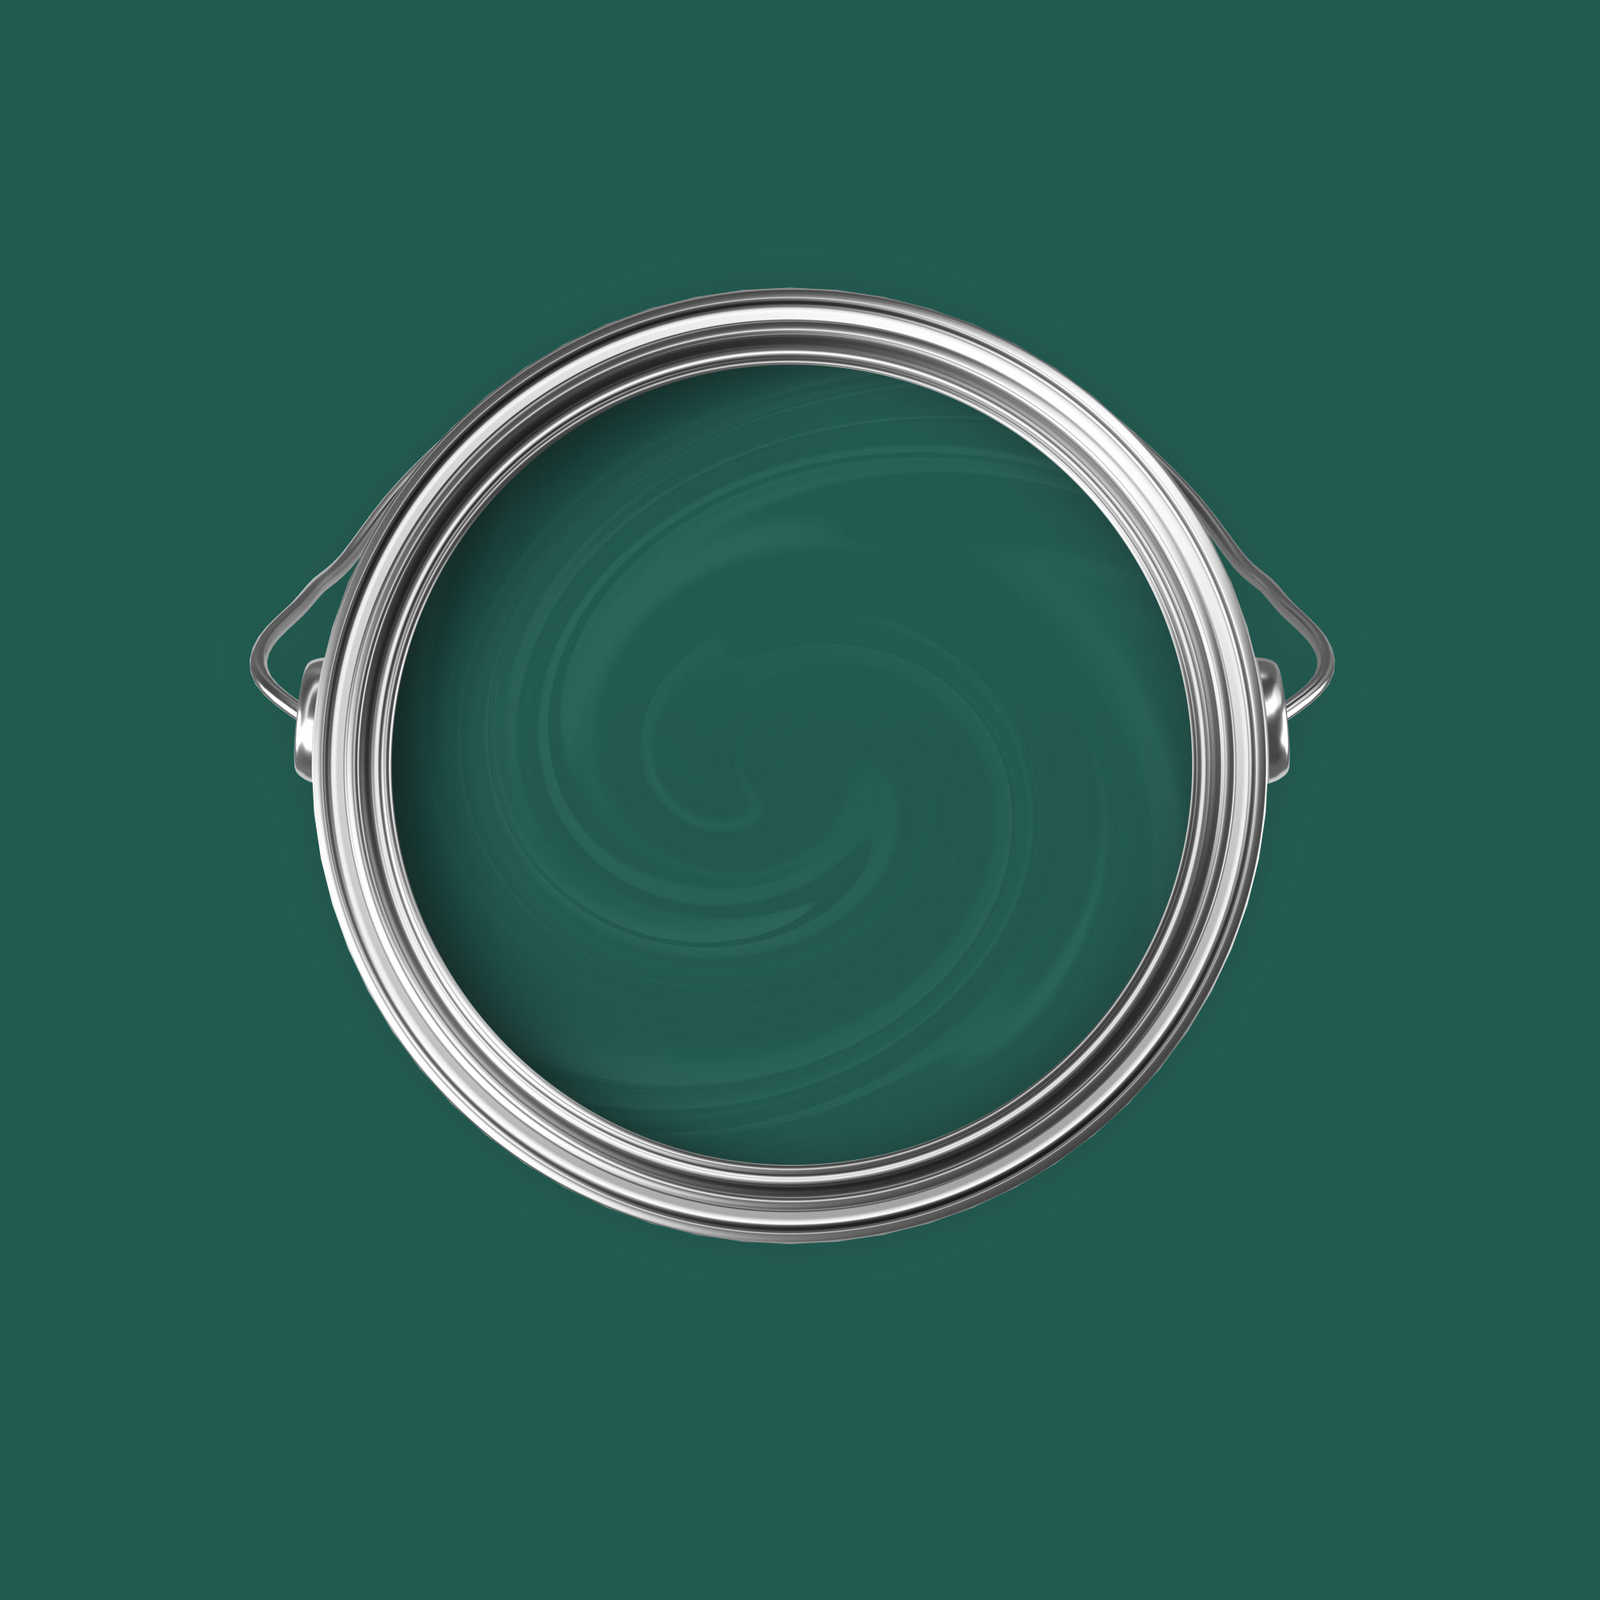             Premium Muurverf prachtig smaragdgroen »Expressive Emerald« NW412 – 5 liter
        